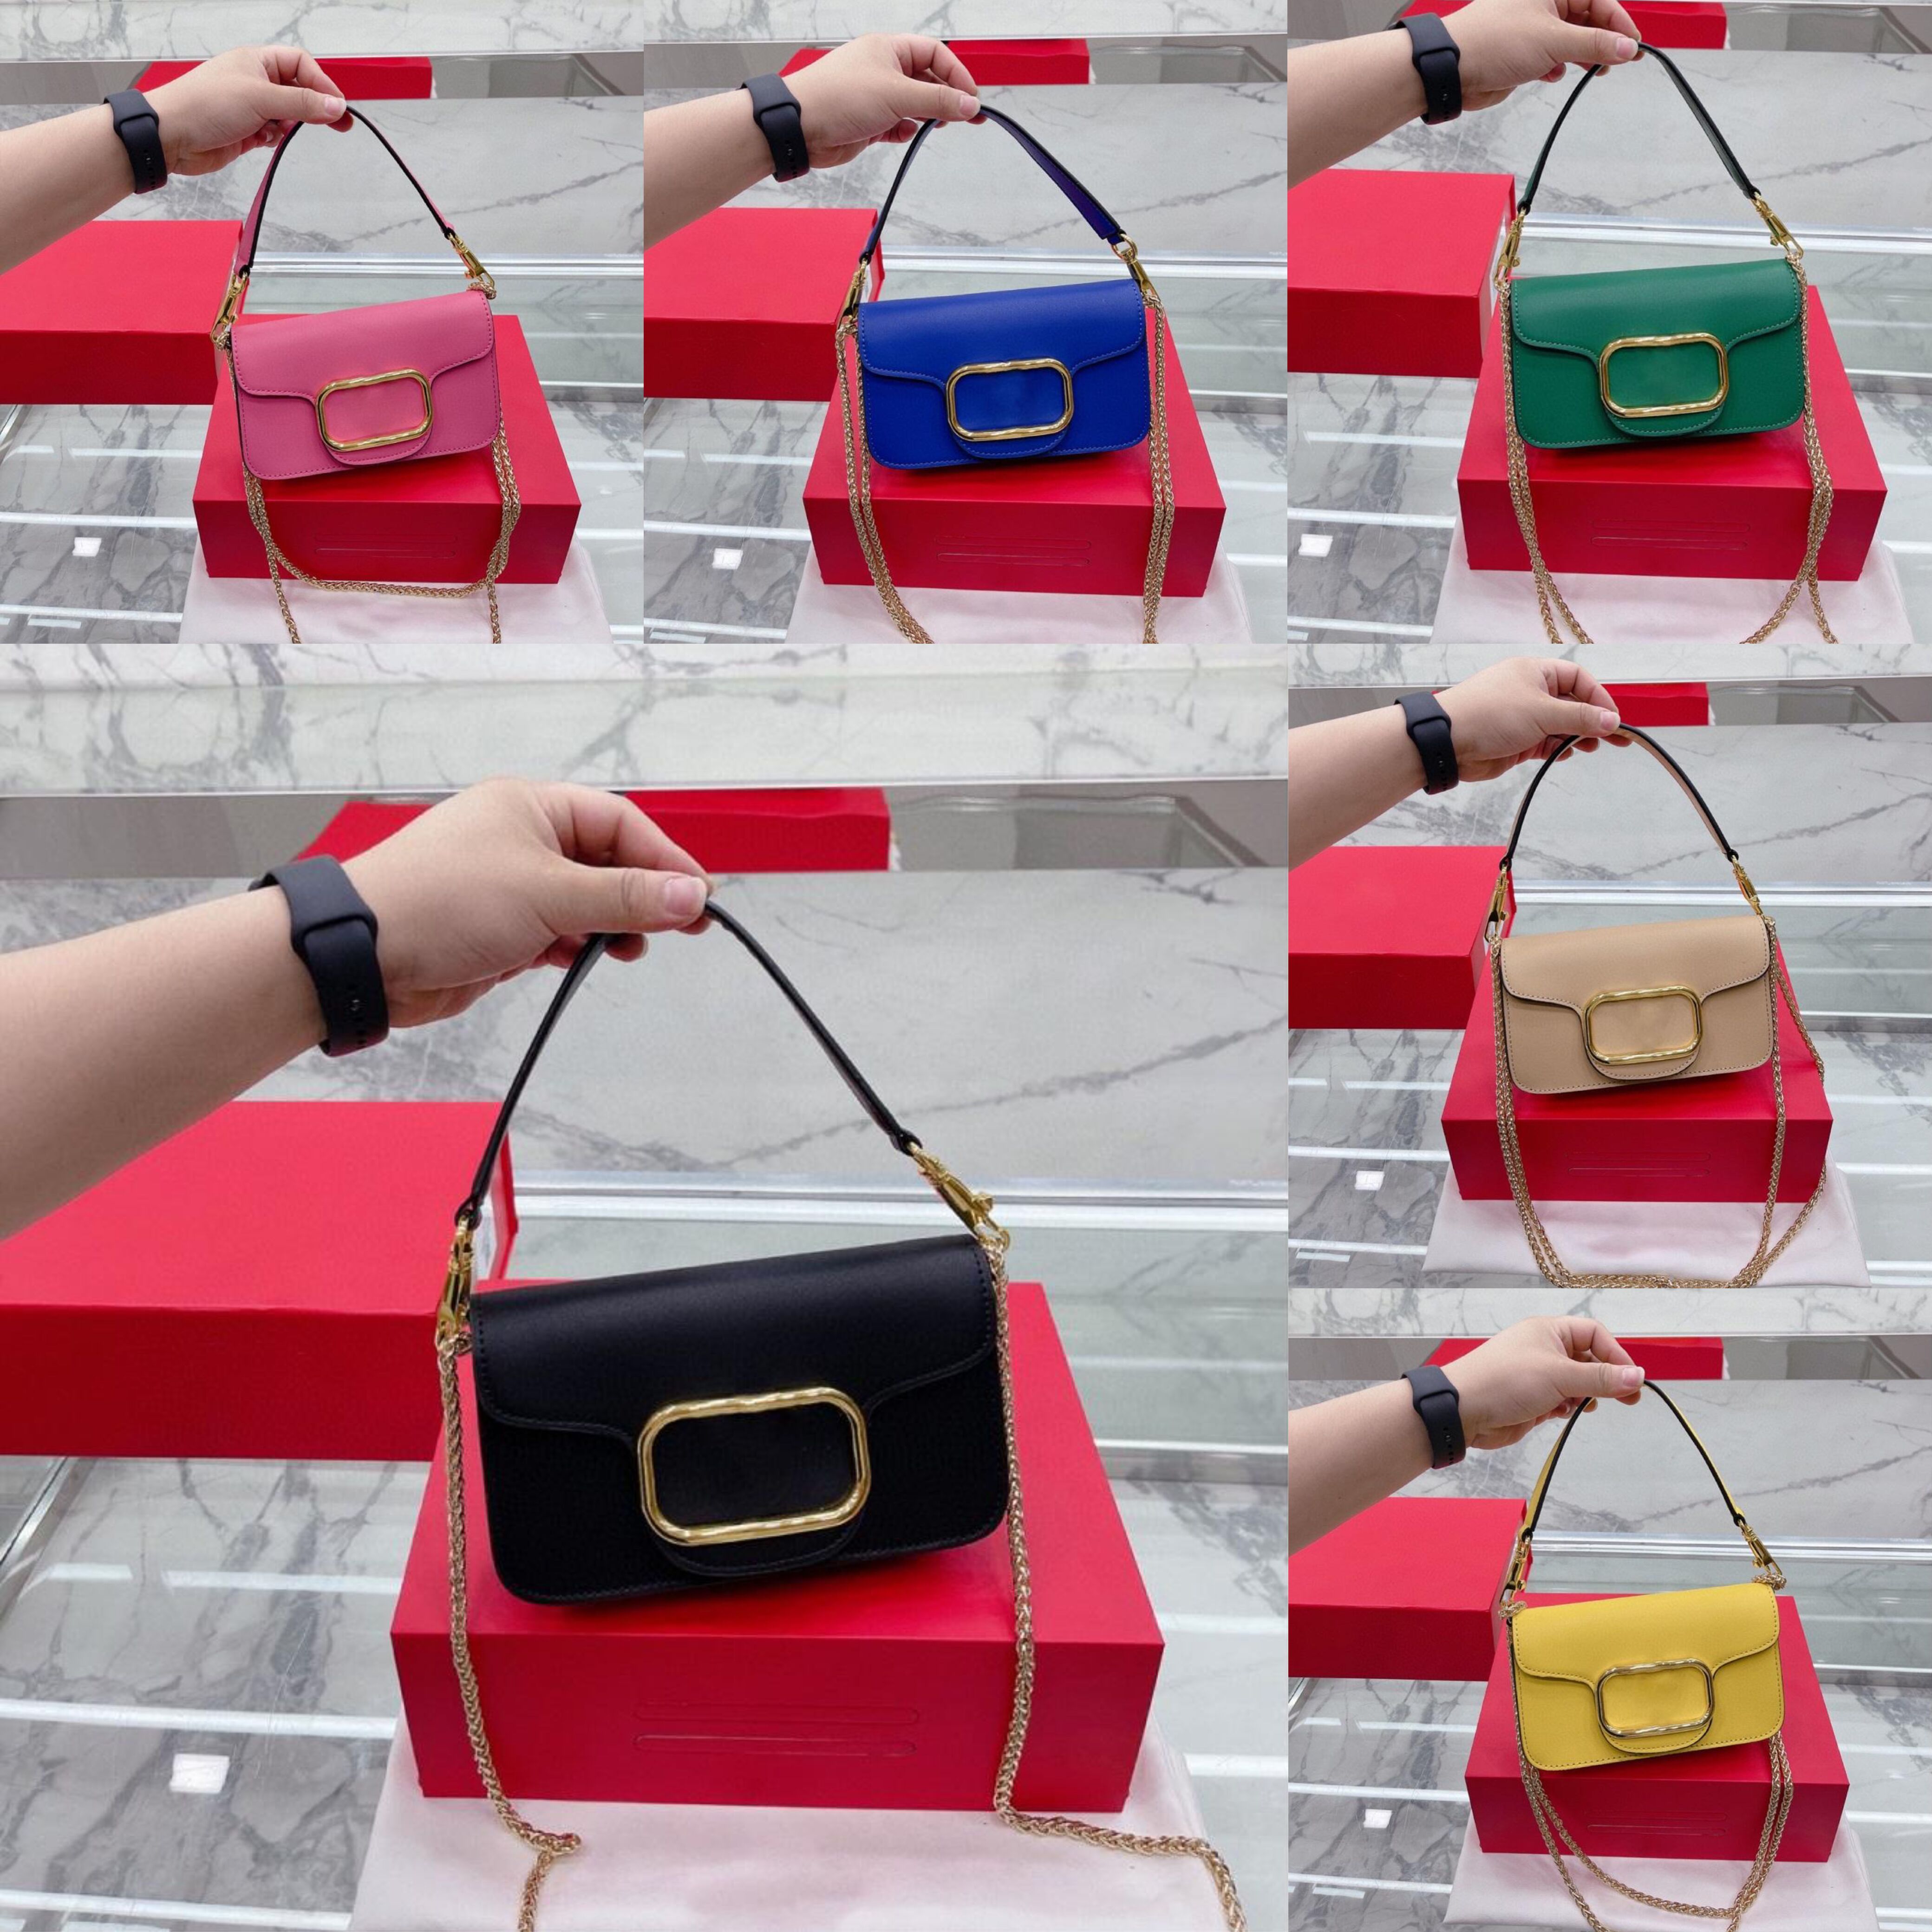 V Brand Italy Designer Handbag 7A Quality Fashion Luxury Shoulder